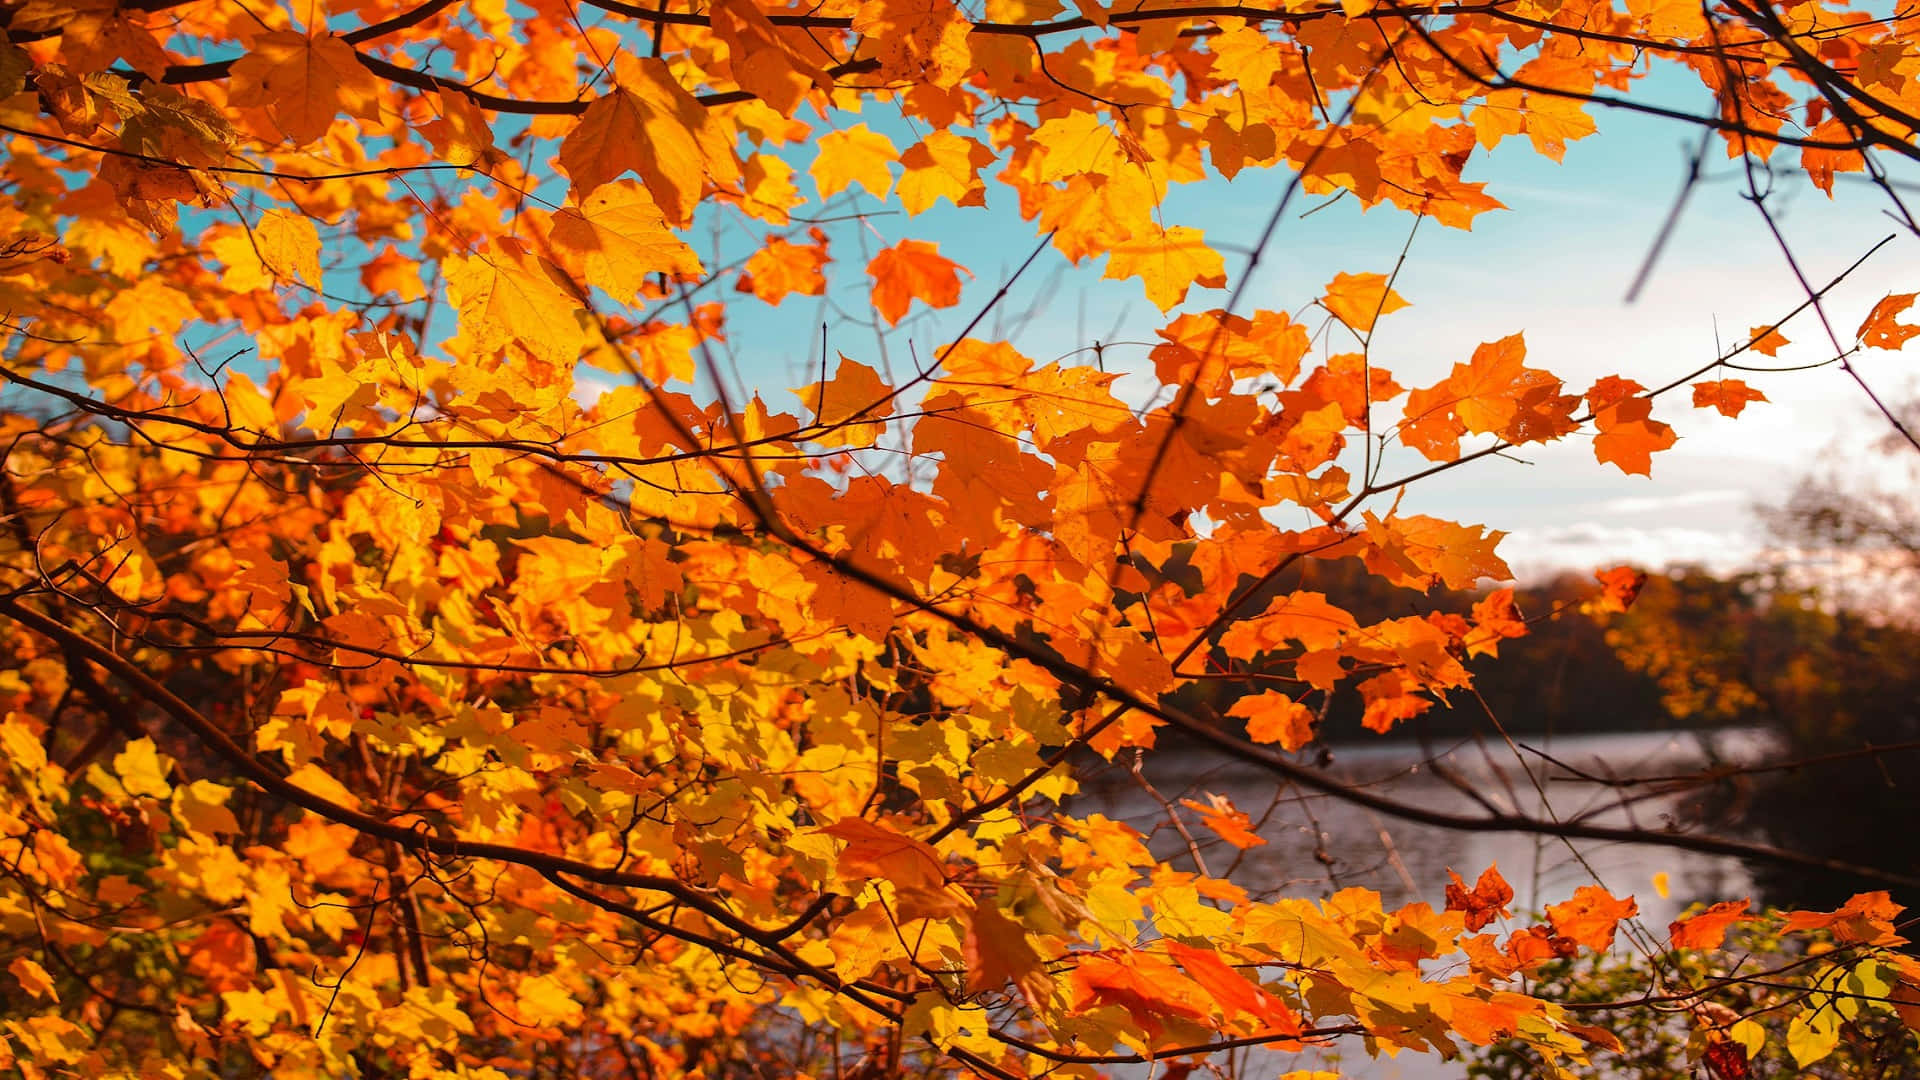 Autumn Leaves Sunlight Glow.jpg Wallpaper